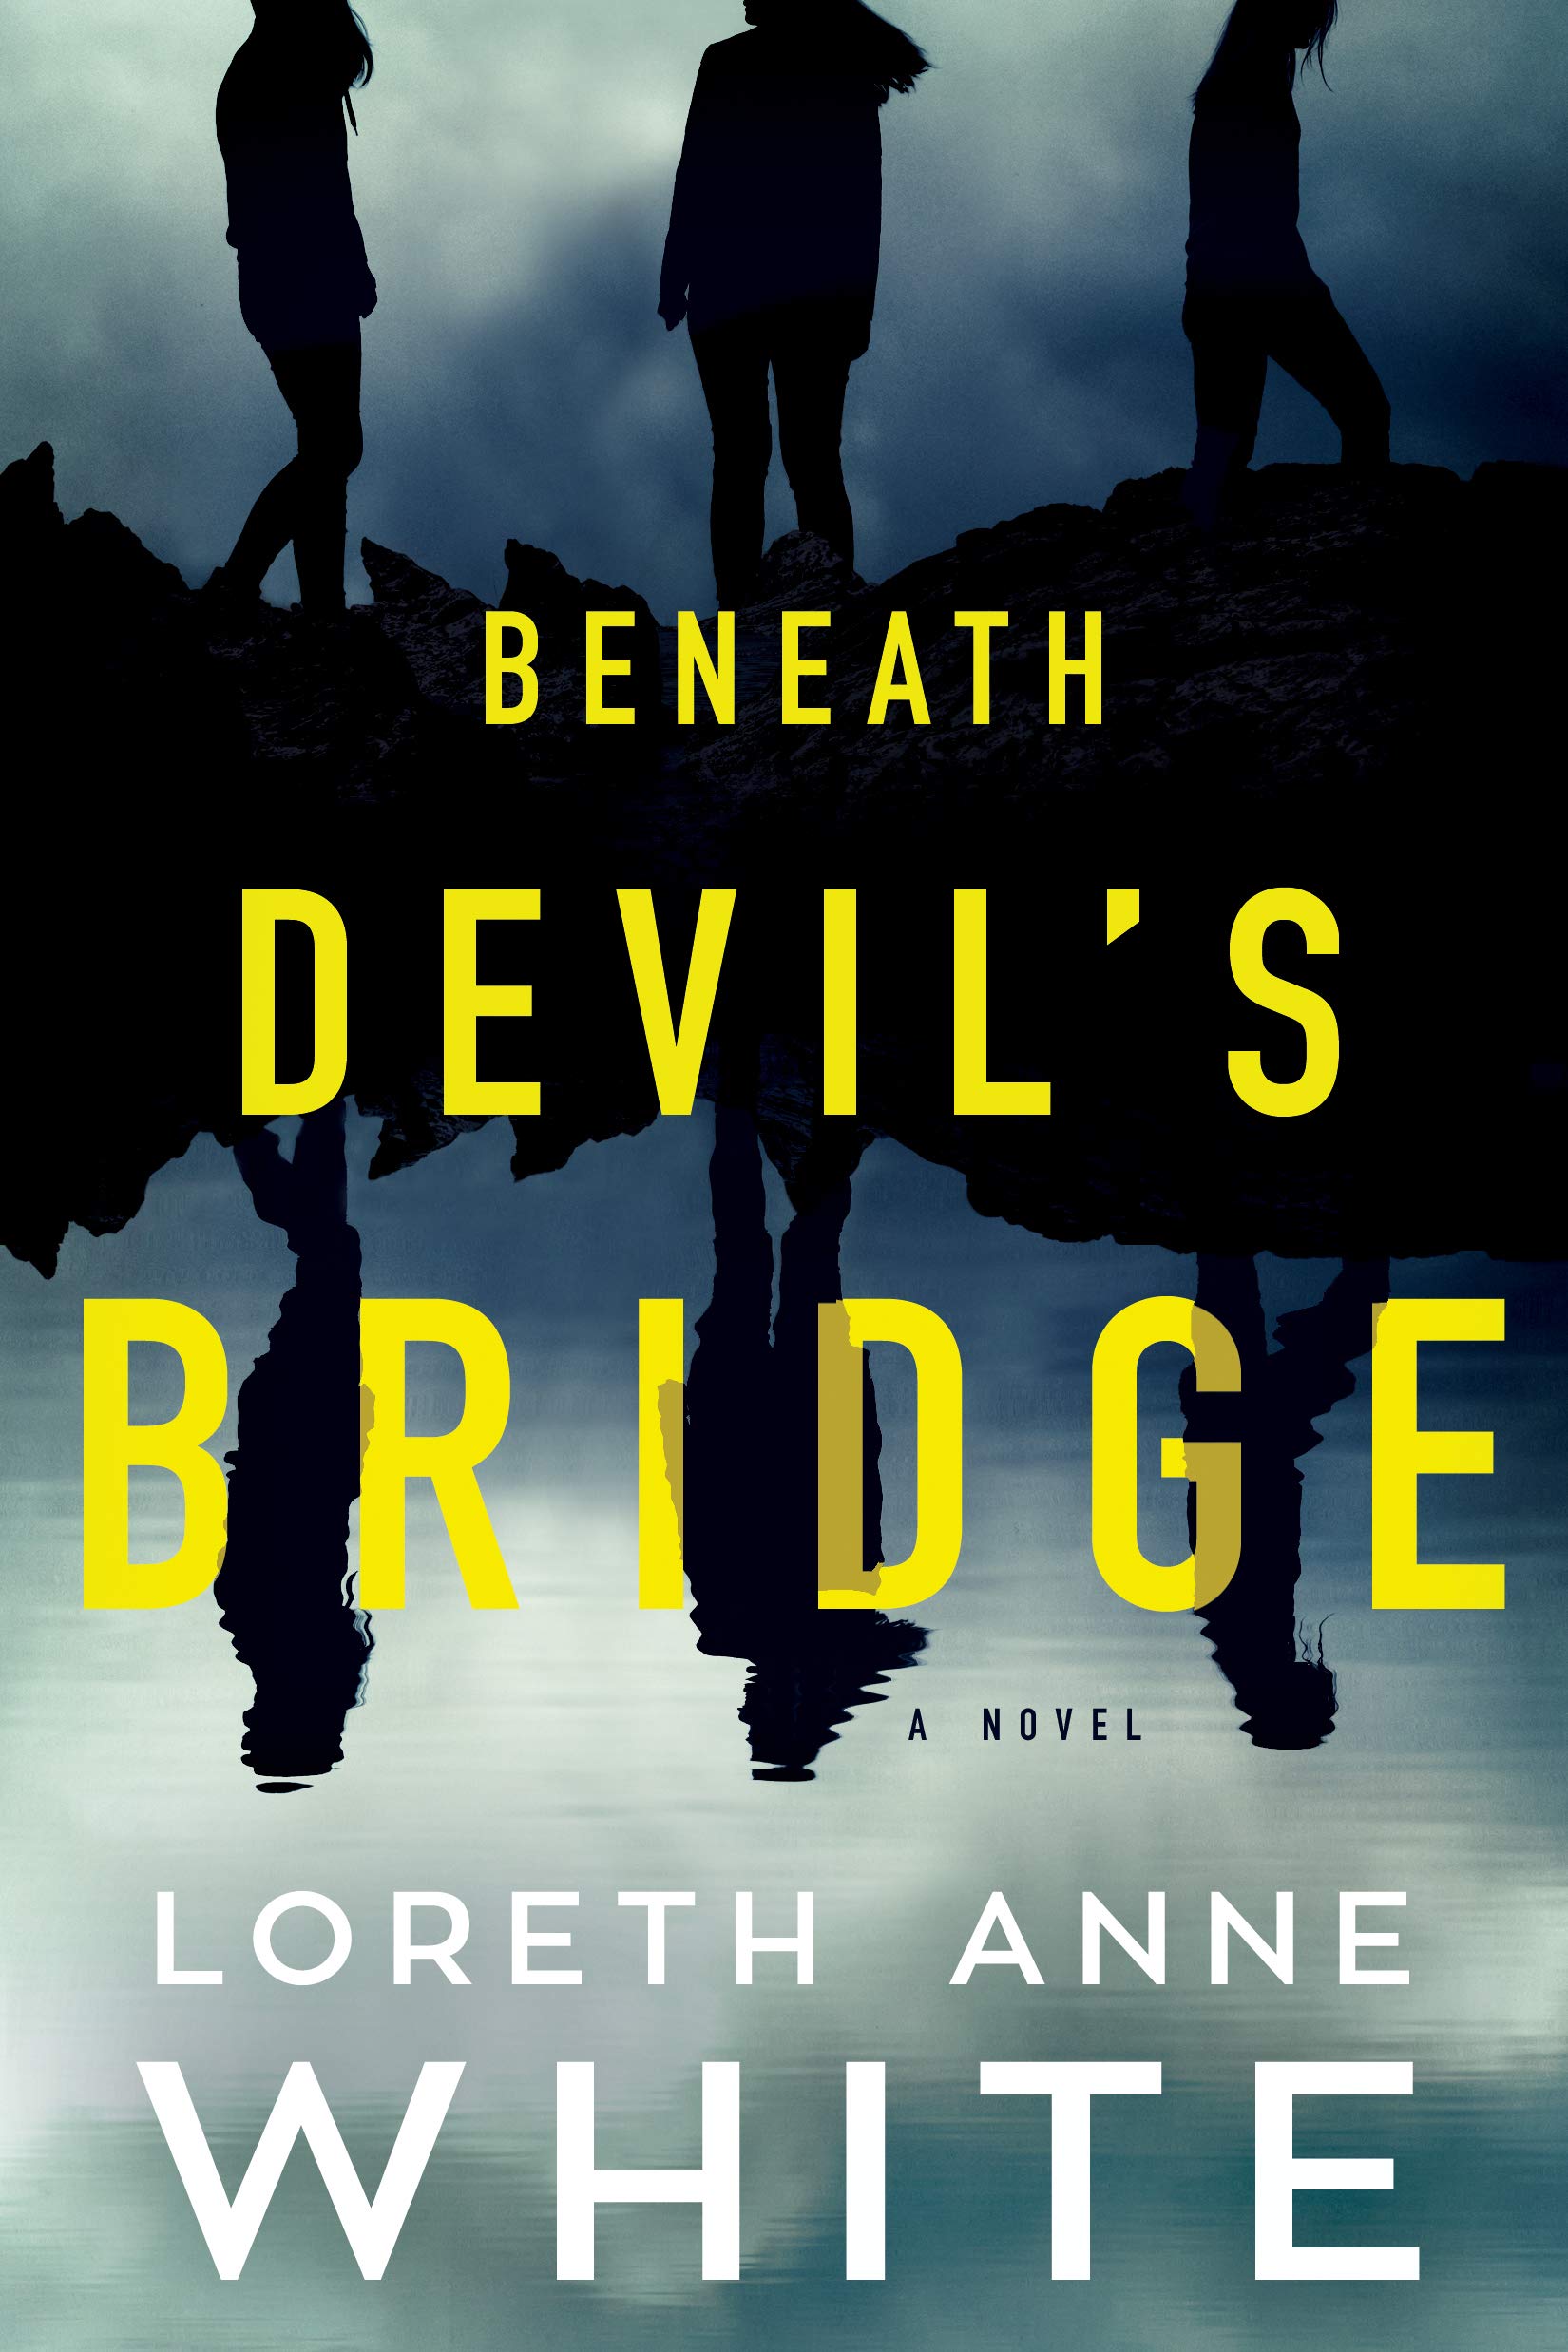 Beneath Devil's Bridge books